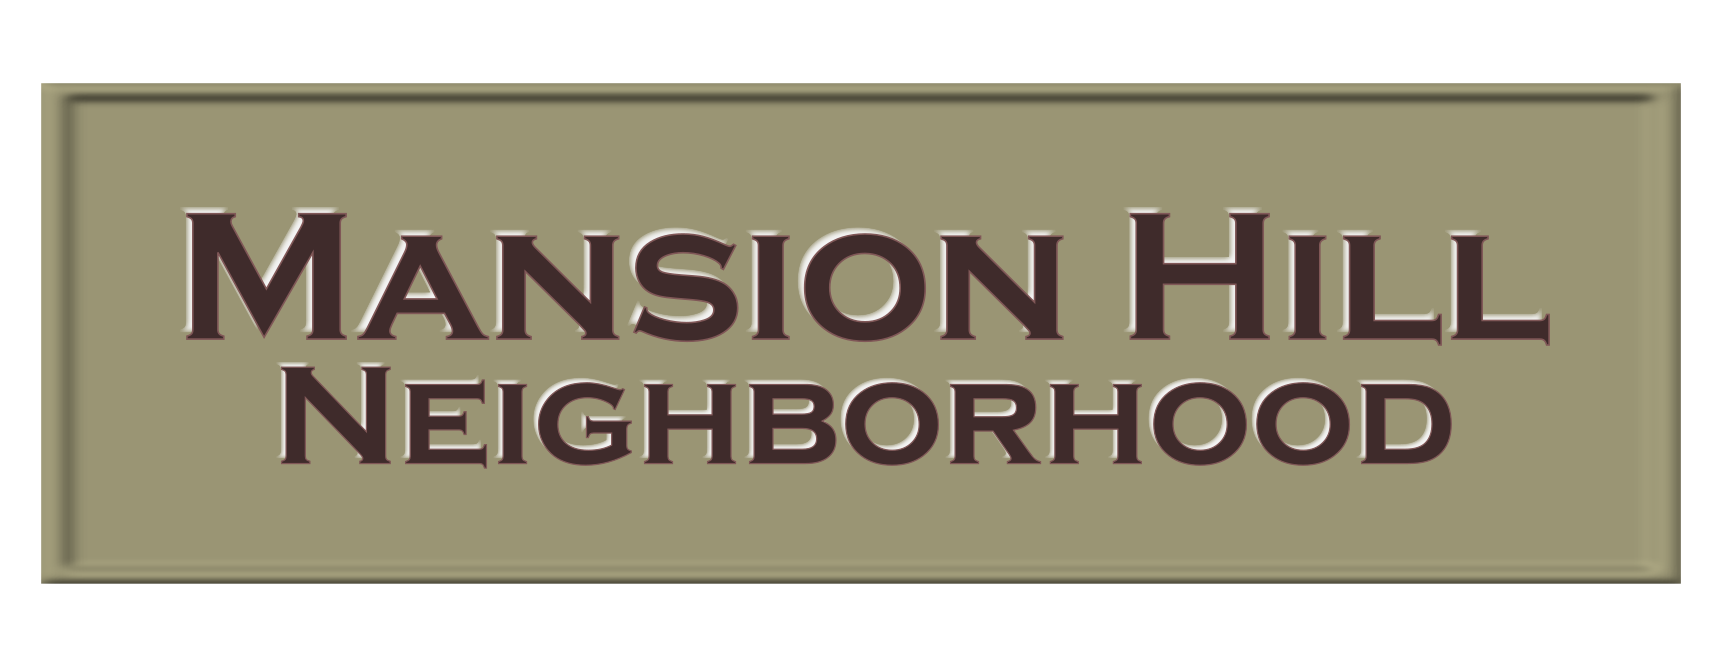 Mansion Hill Neighborhood Sign